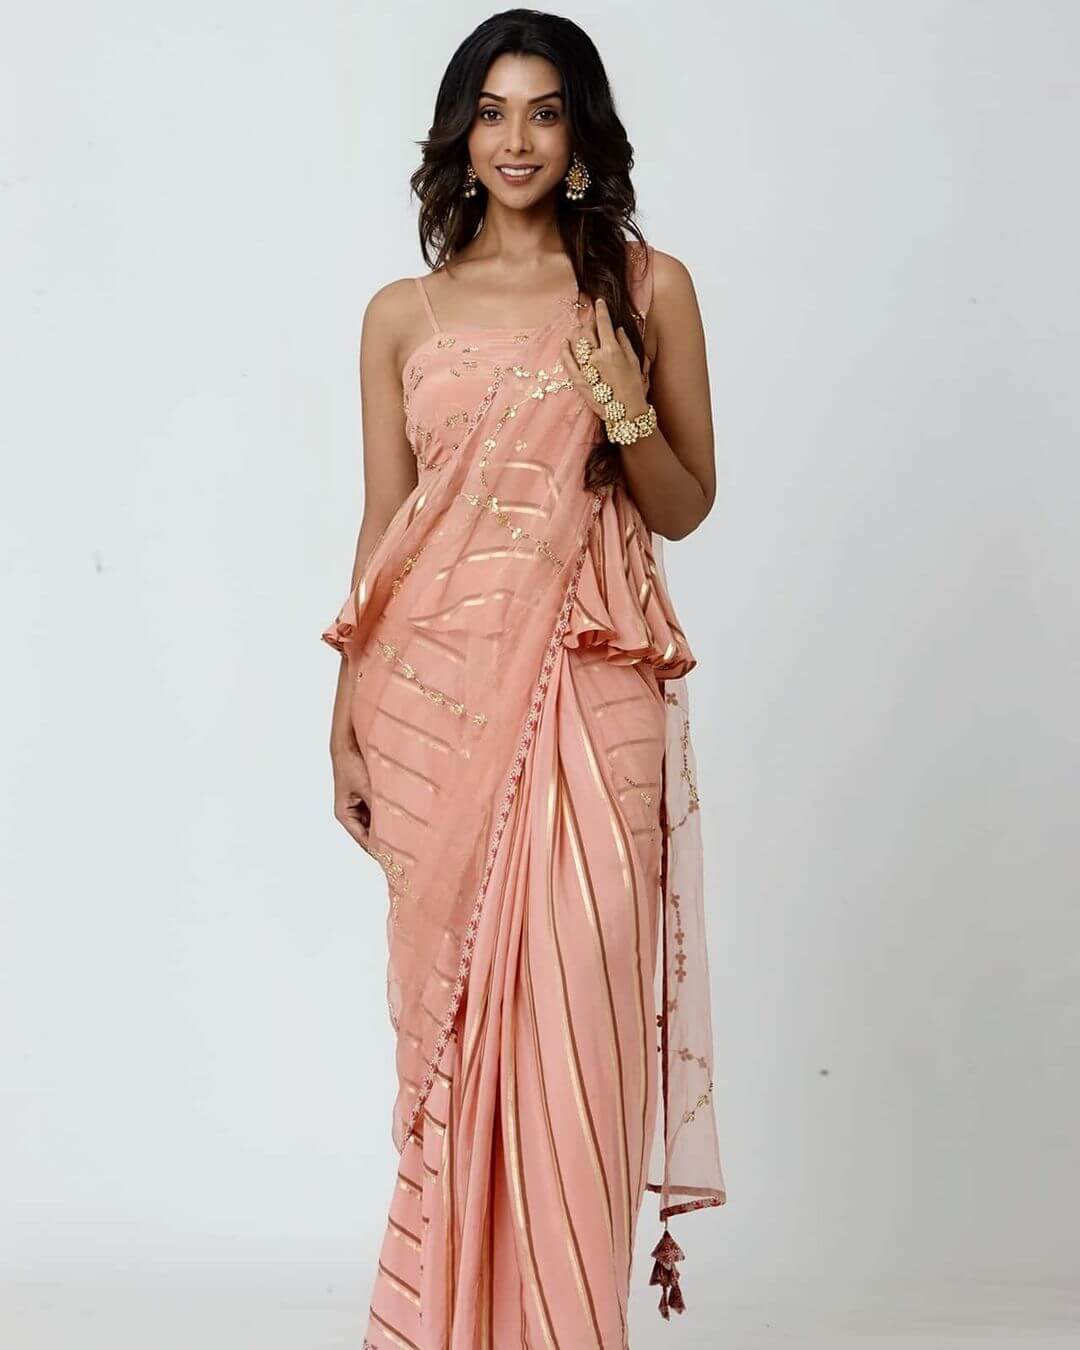 Anupriya Goenka Graceful Look In Pink Saree Outfit